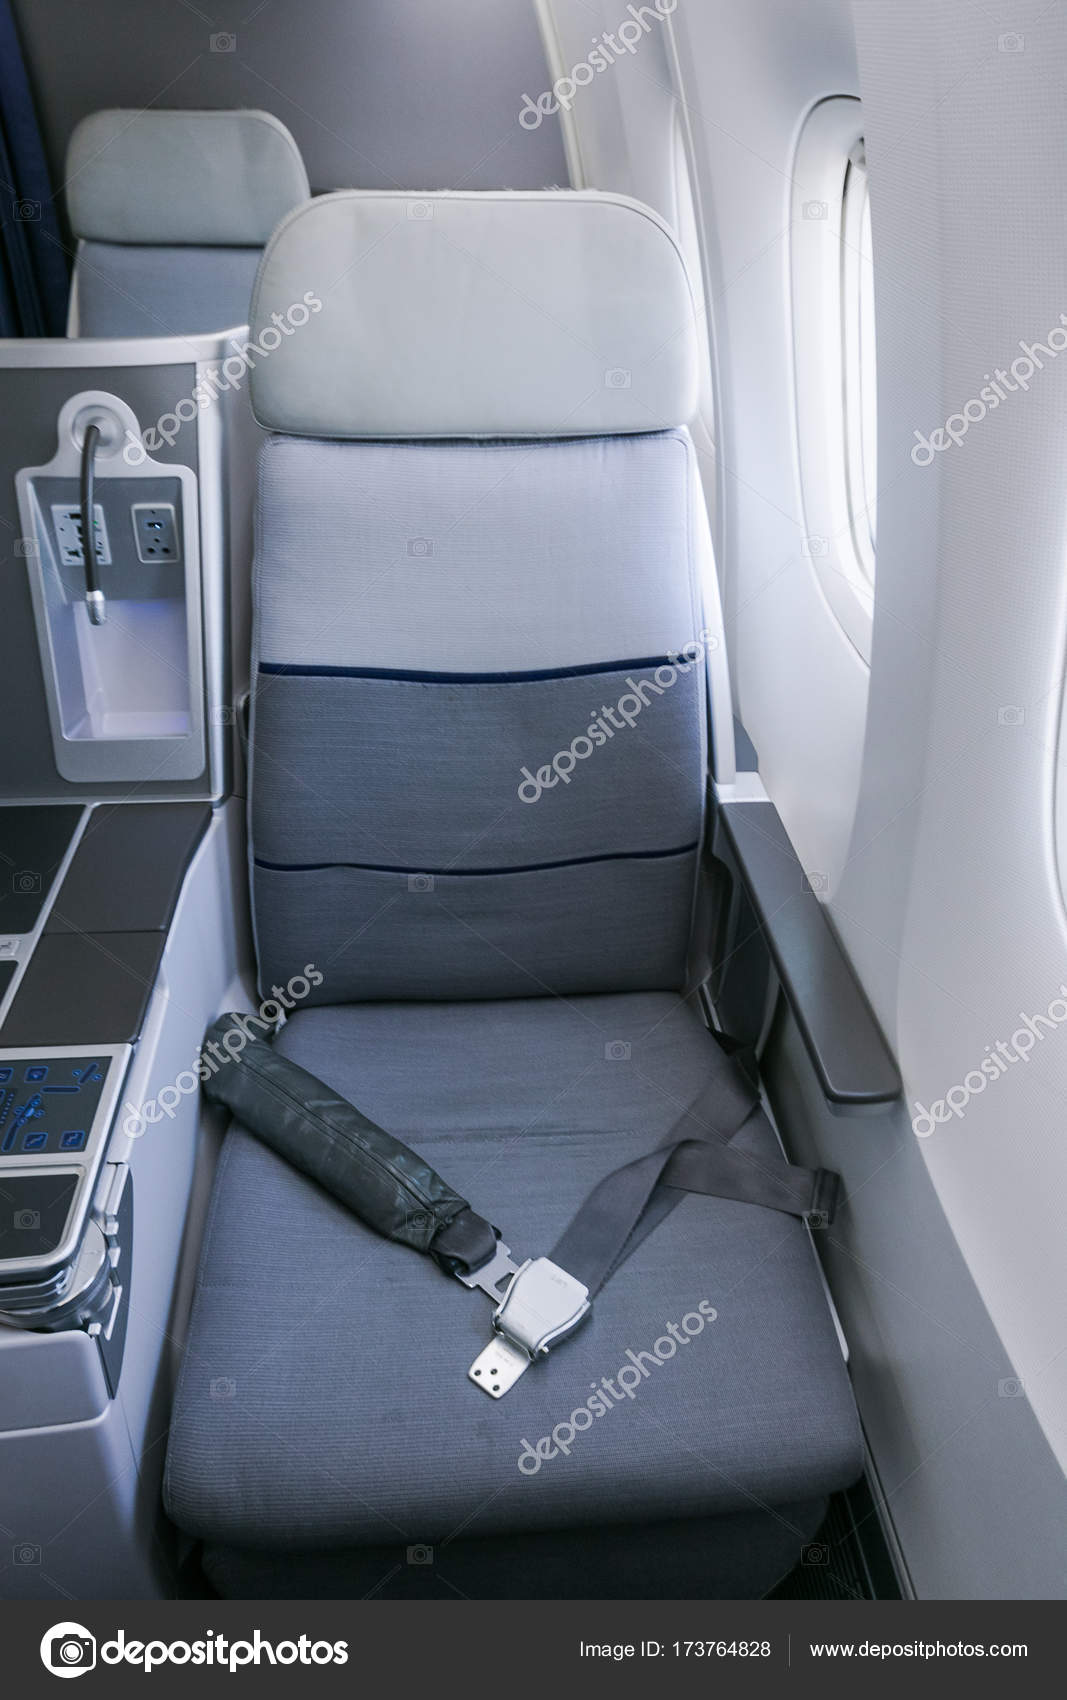 https://st3.depositphotos.com/1736422/17376/i/1600/depositphotos_173764828-stock-photo-empty-seats-window-aircraft.jpg